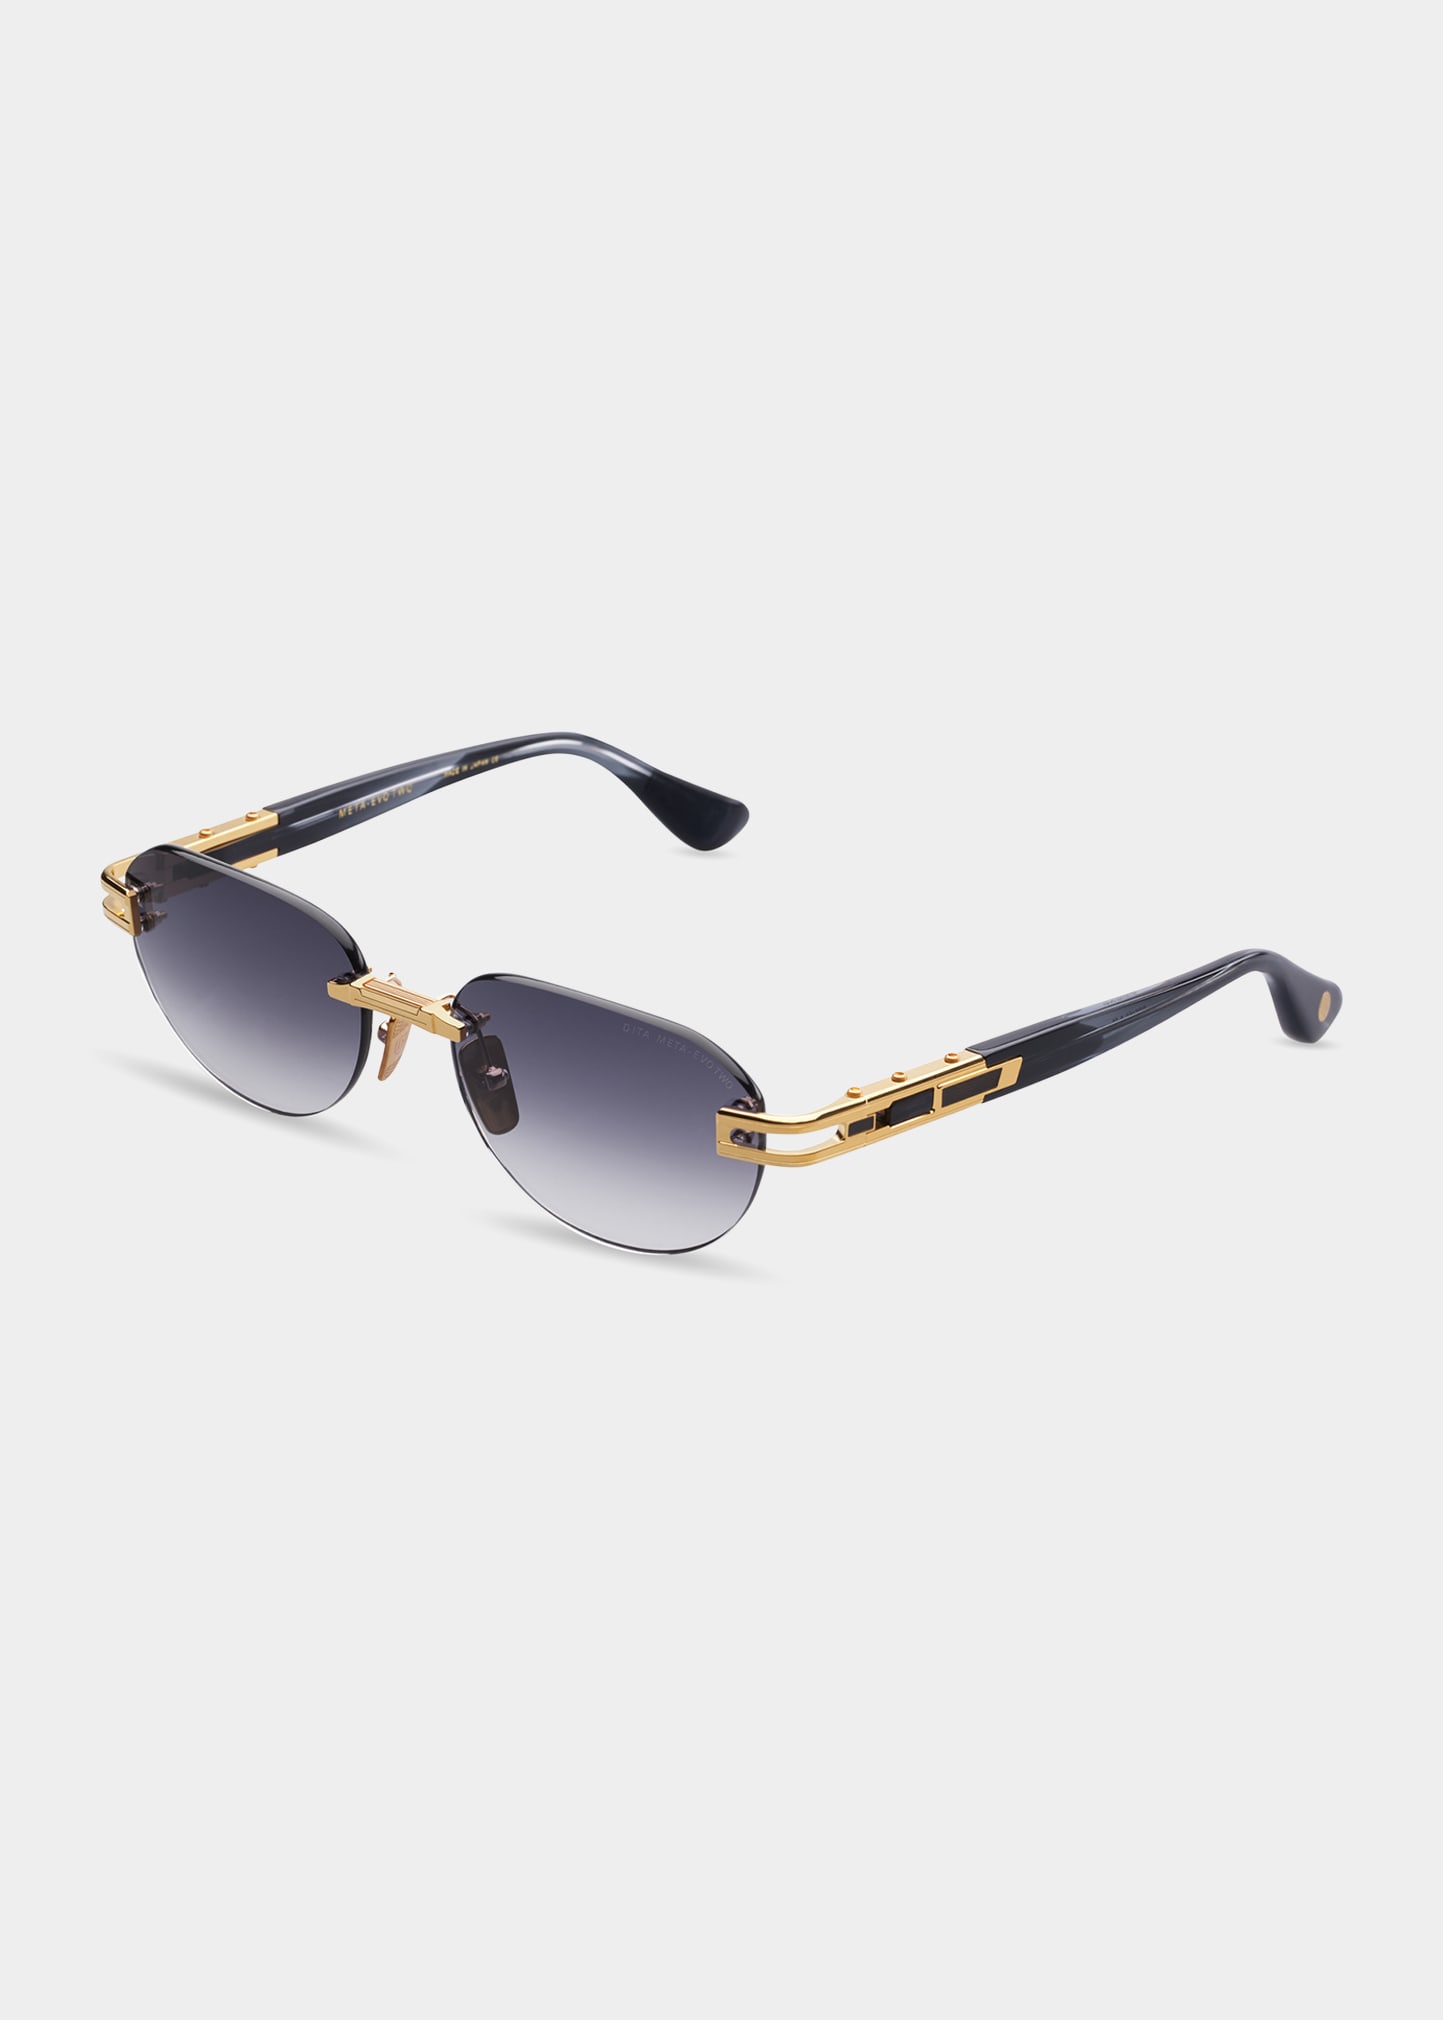 DESPADA,Made In ITALY  Metal Frame Classic Round Sunglasses 